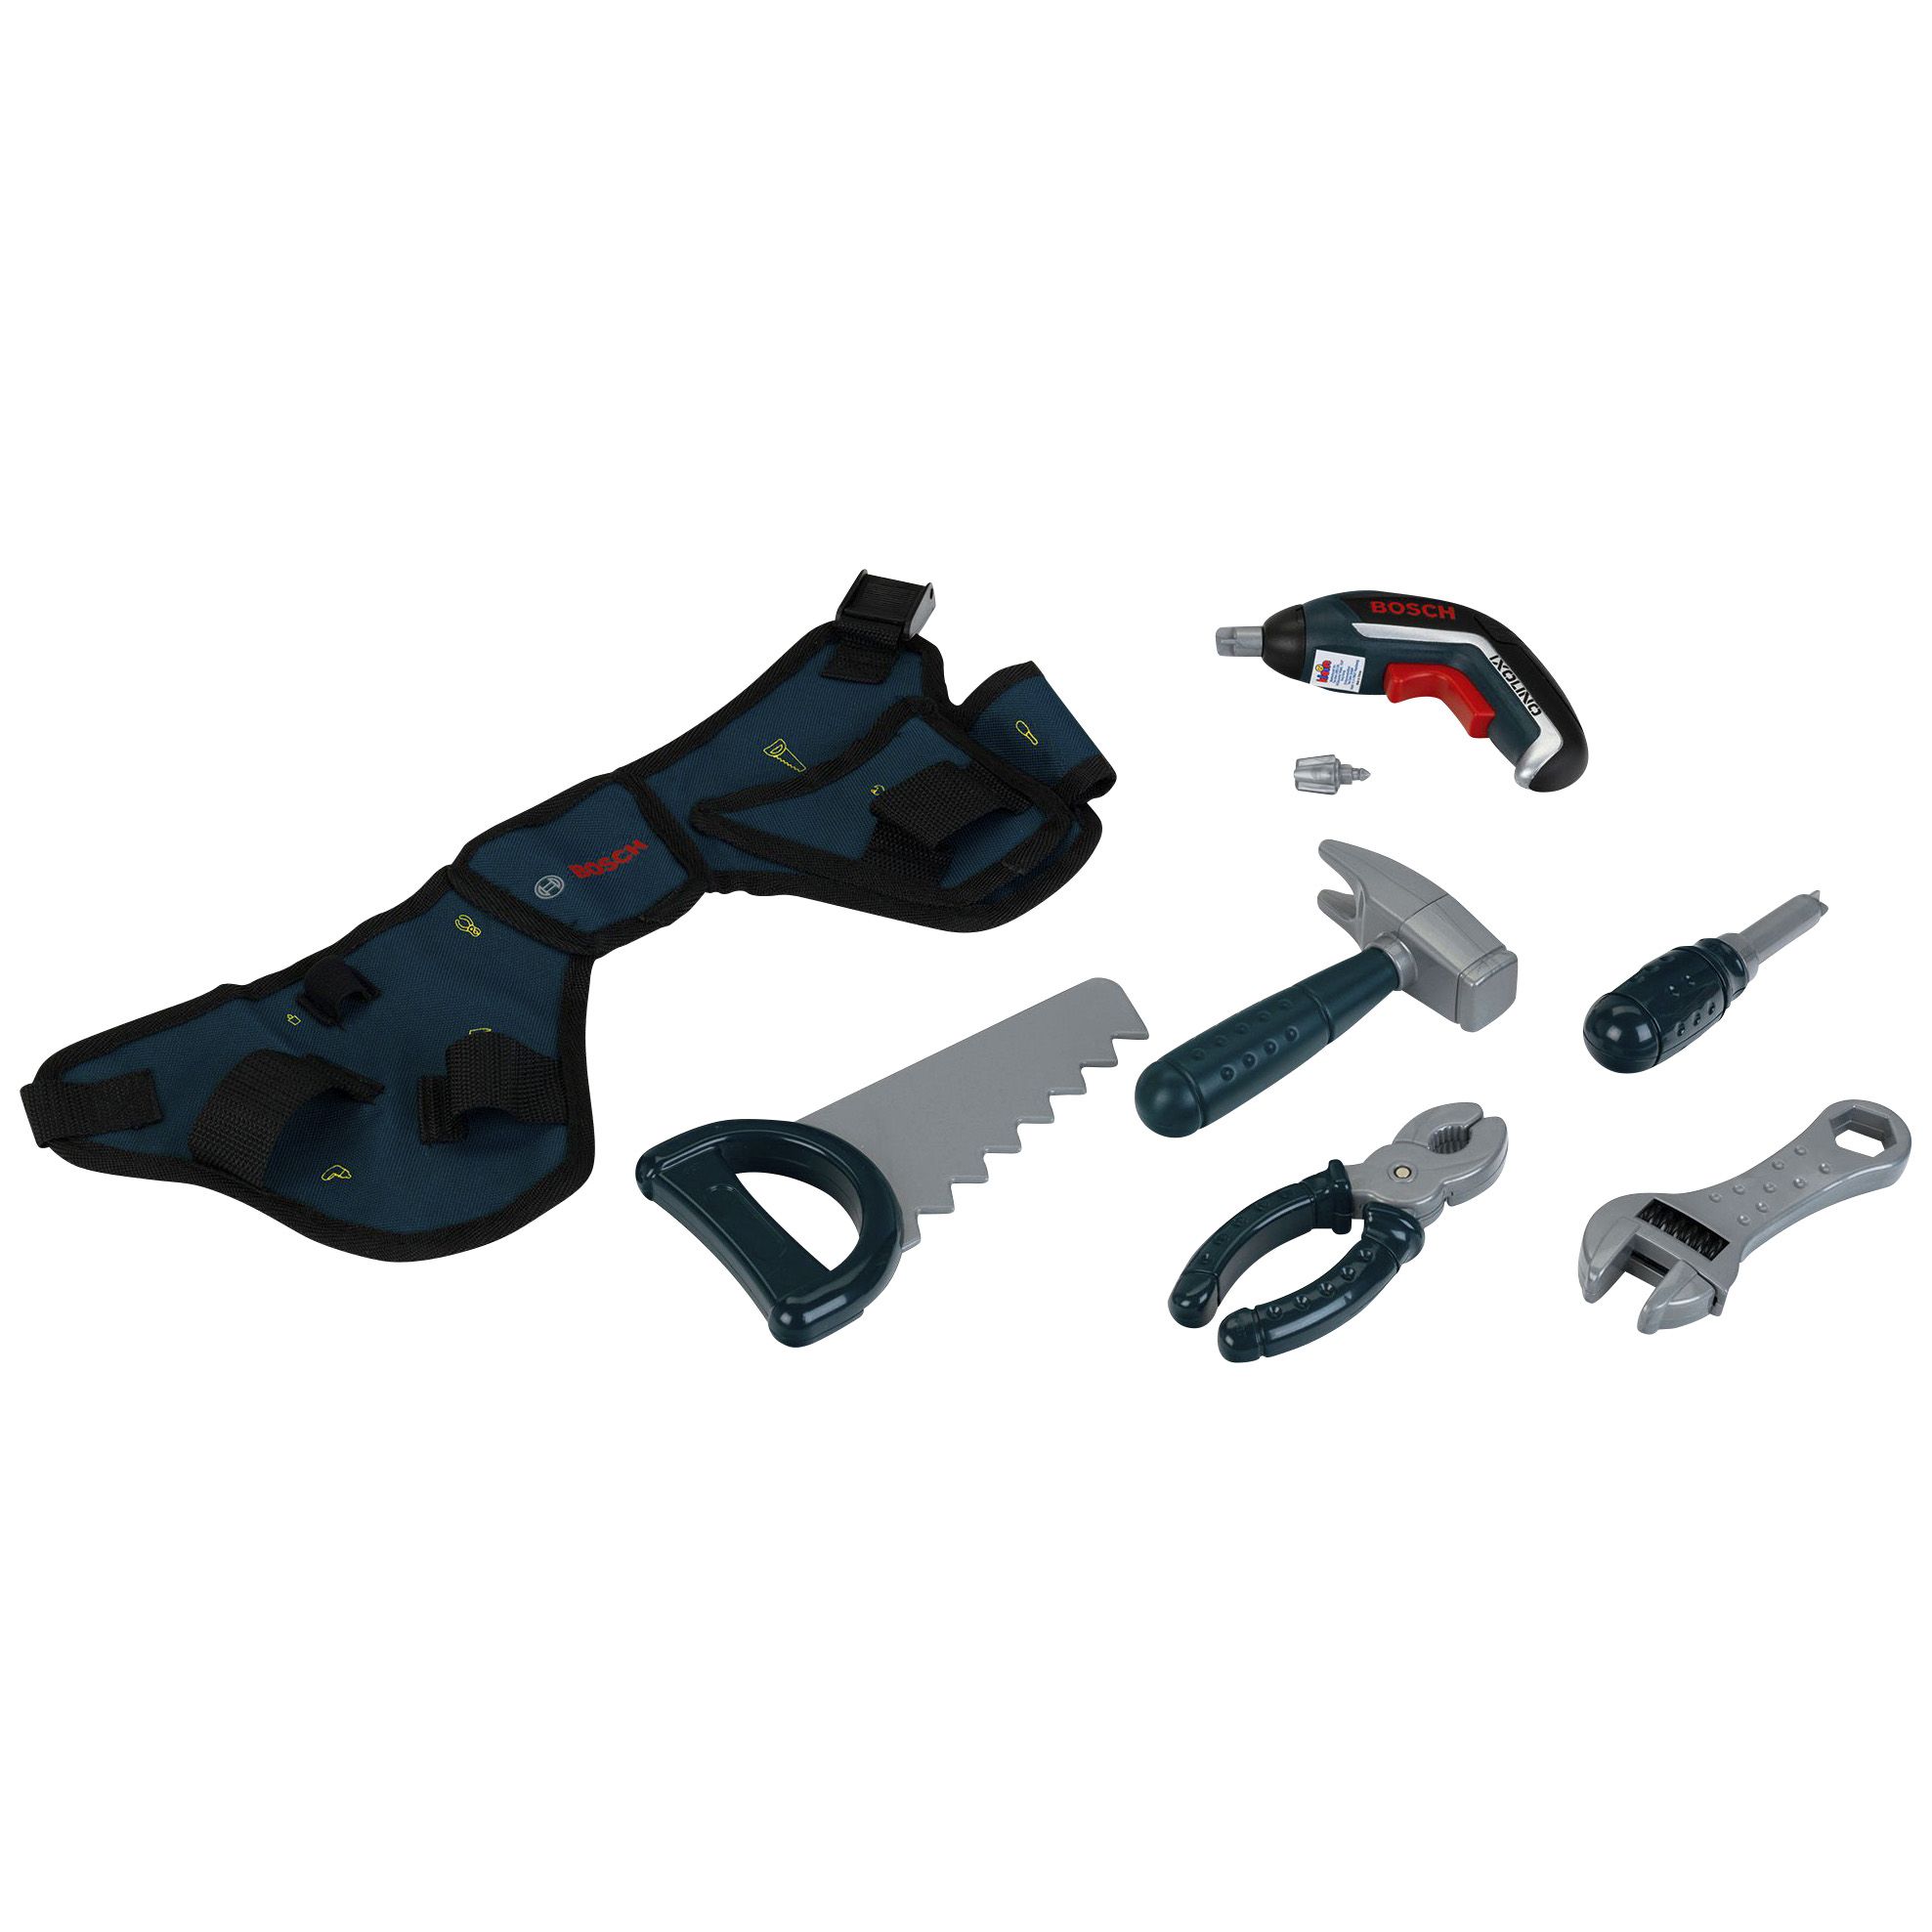 Smoby Black & Decker Tool Belt